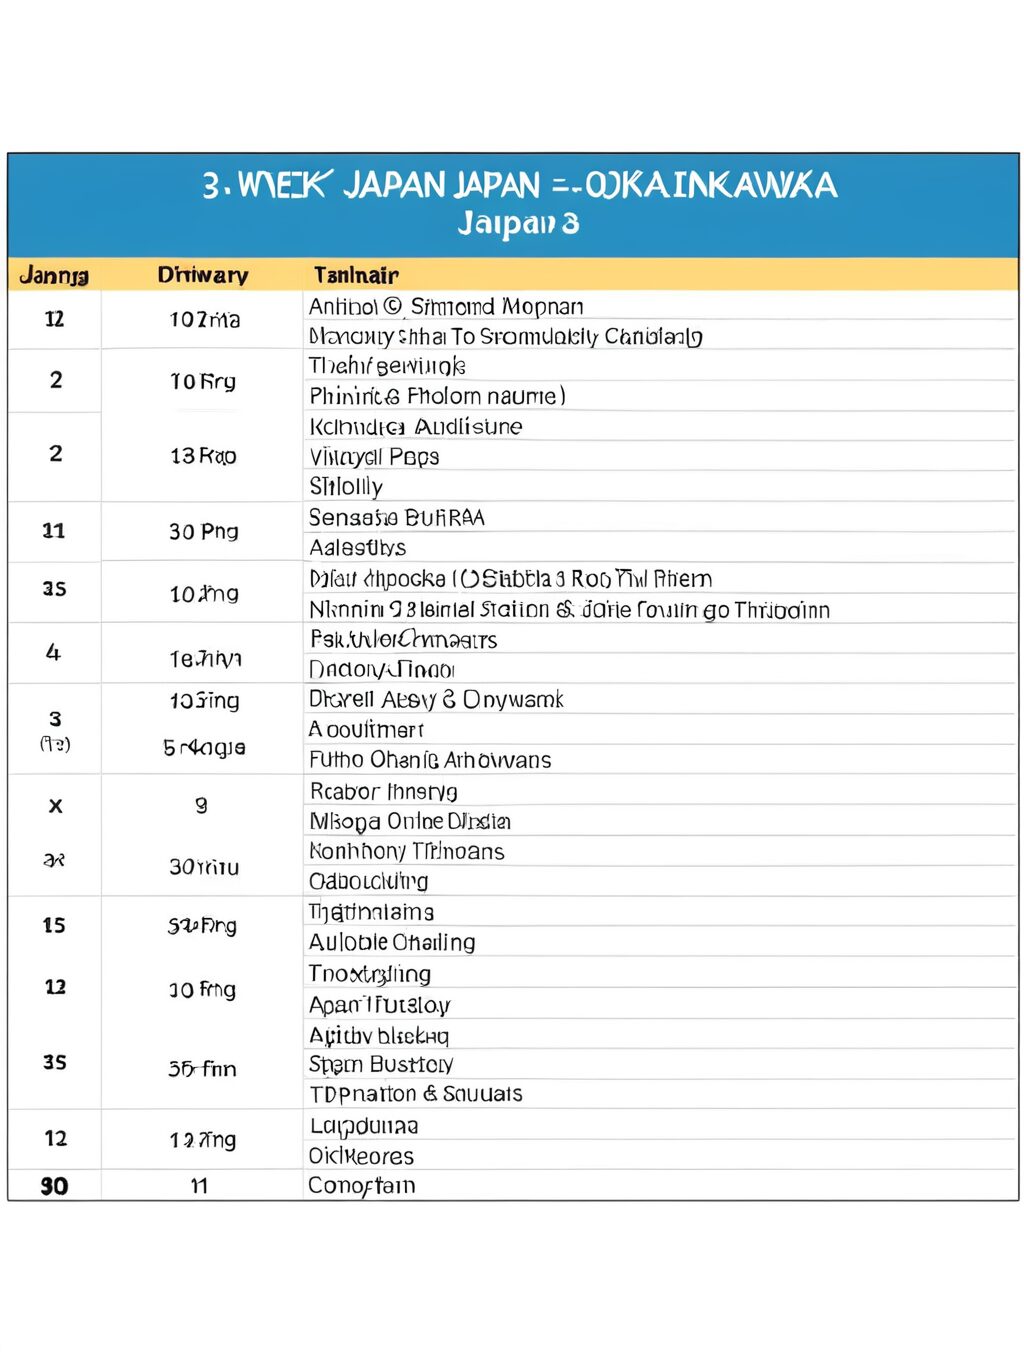 3 week japan itinerary including okinawa